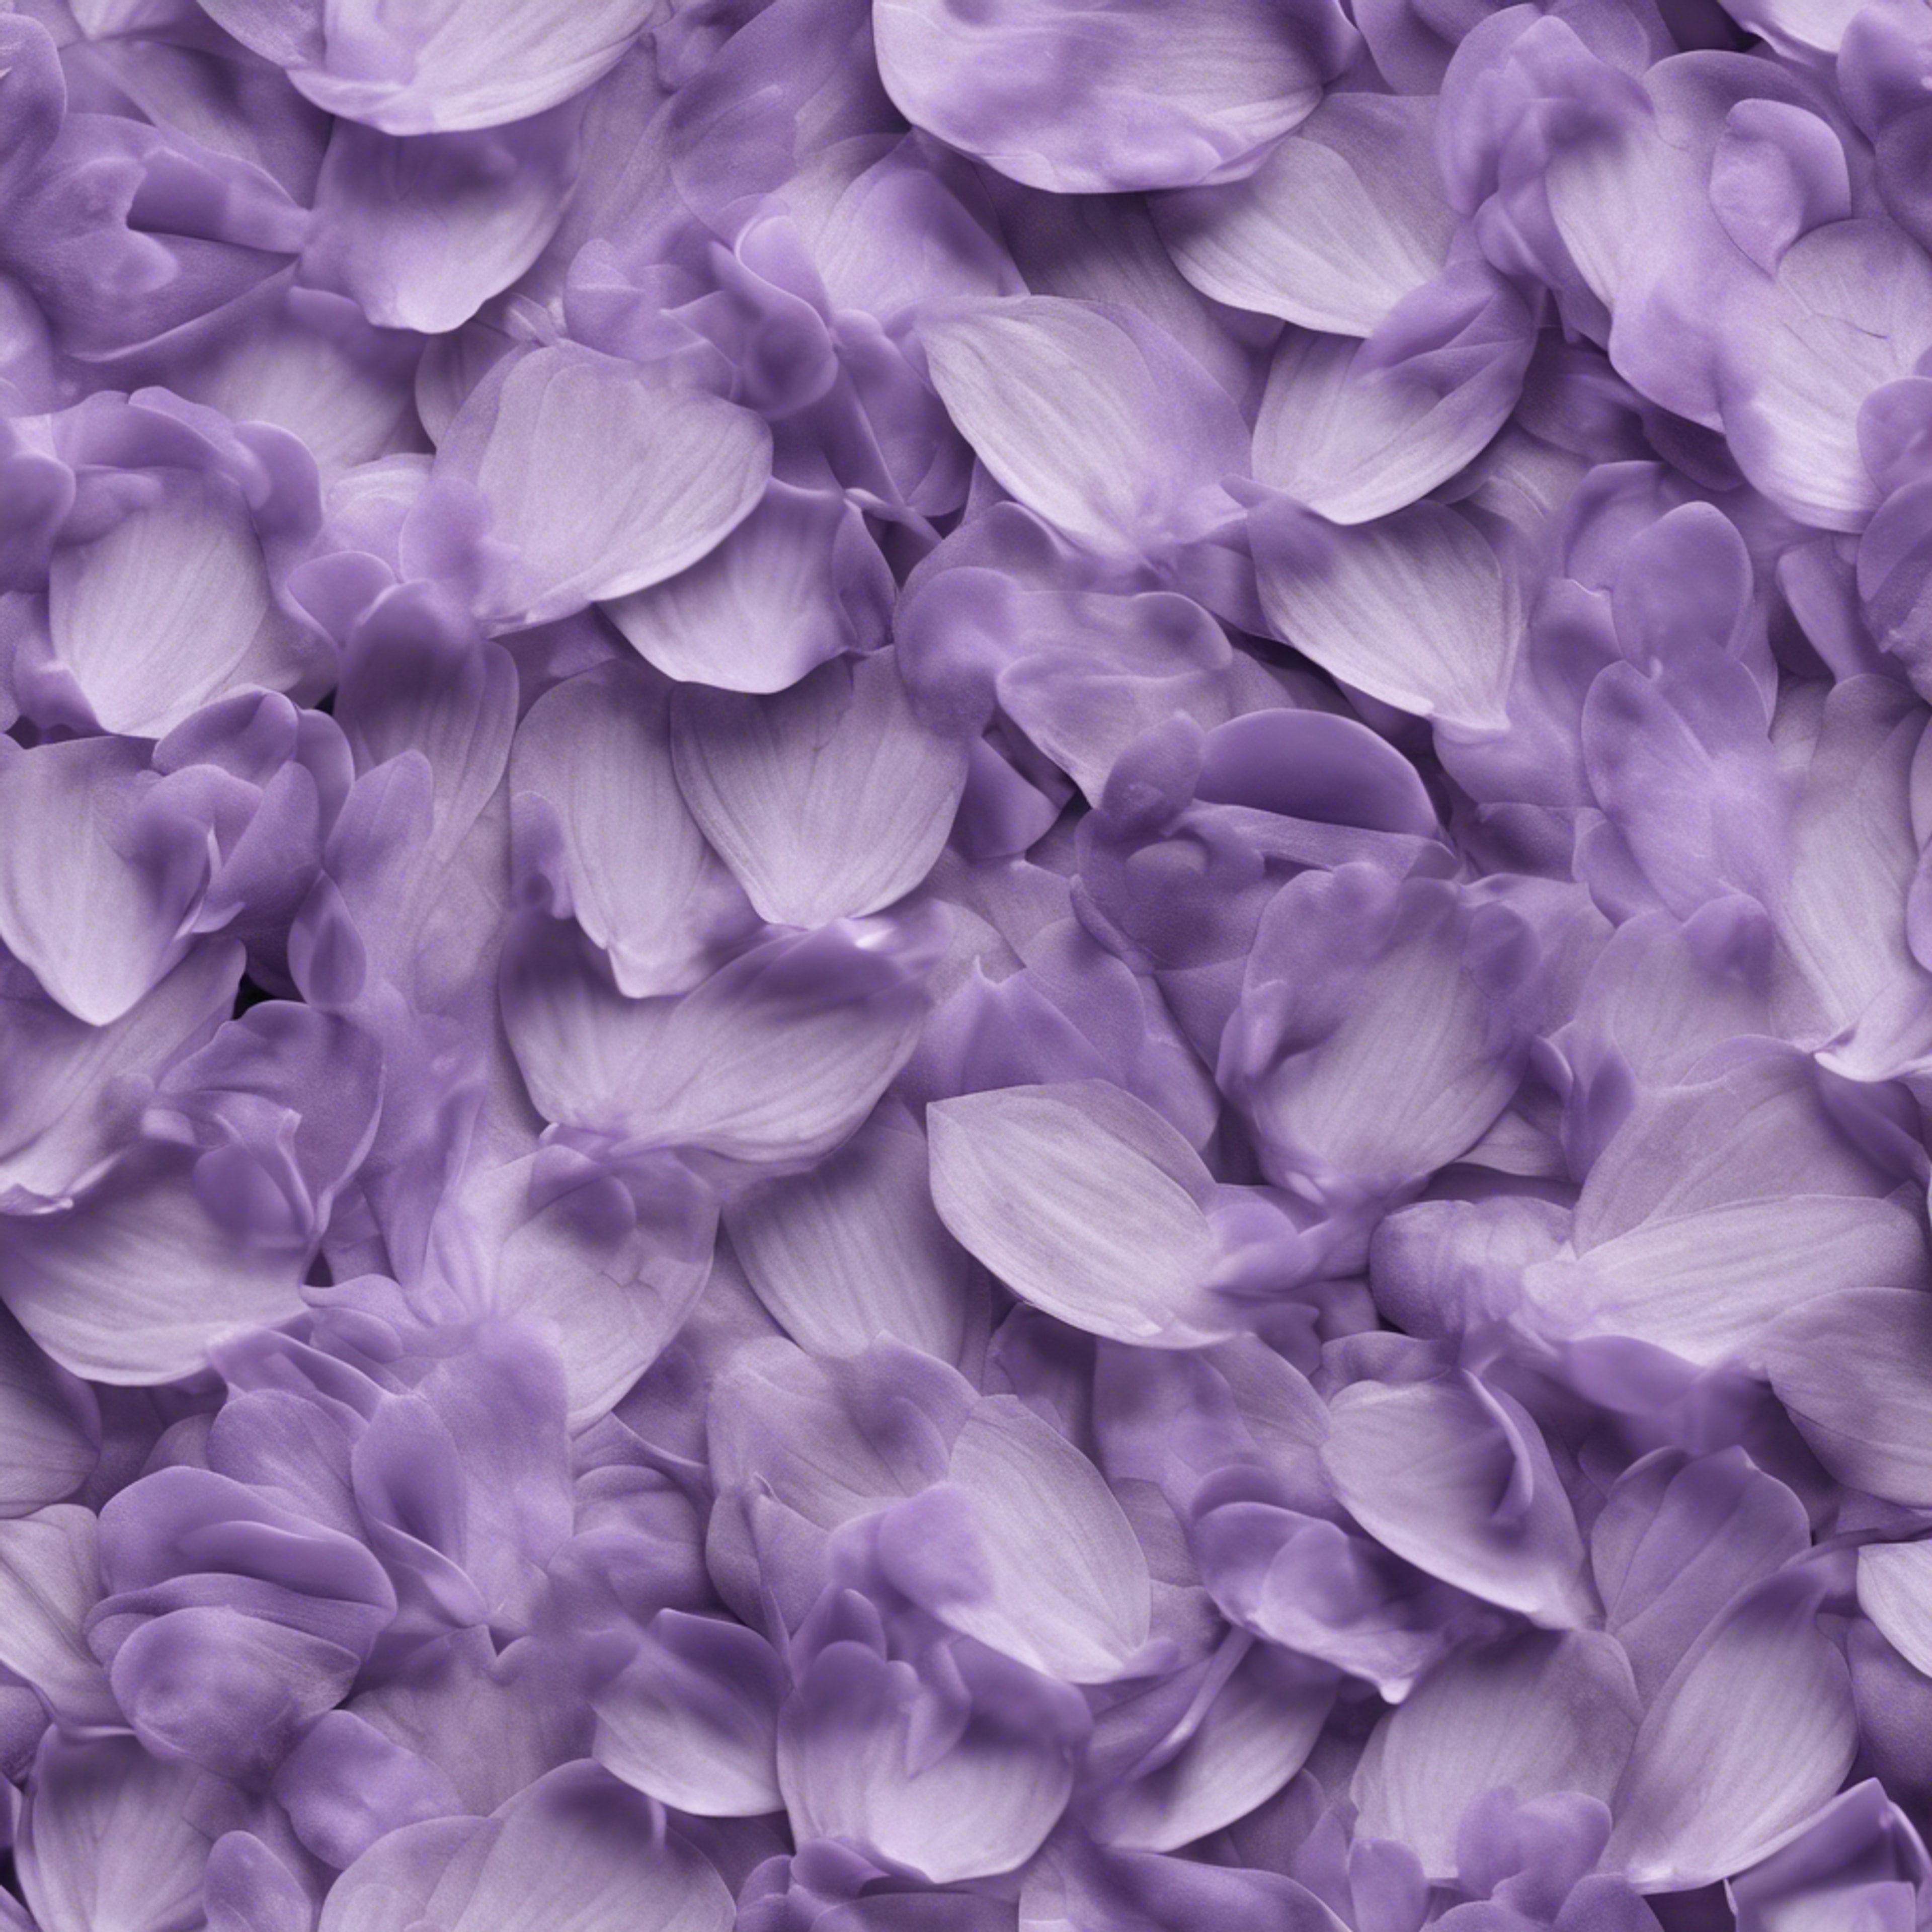 Seamless delicate pattern of layered lavender petals duvar kağıdı[df581ced6ed94056816b]